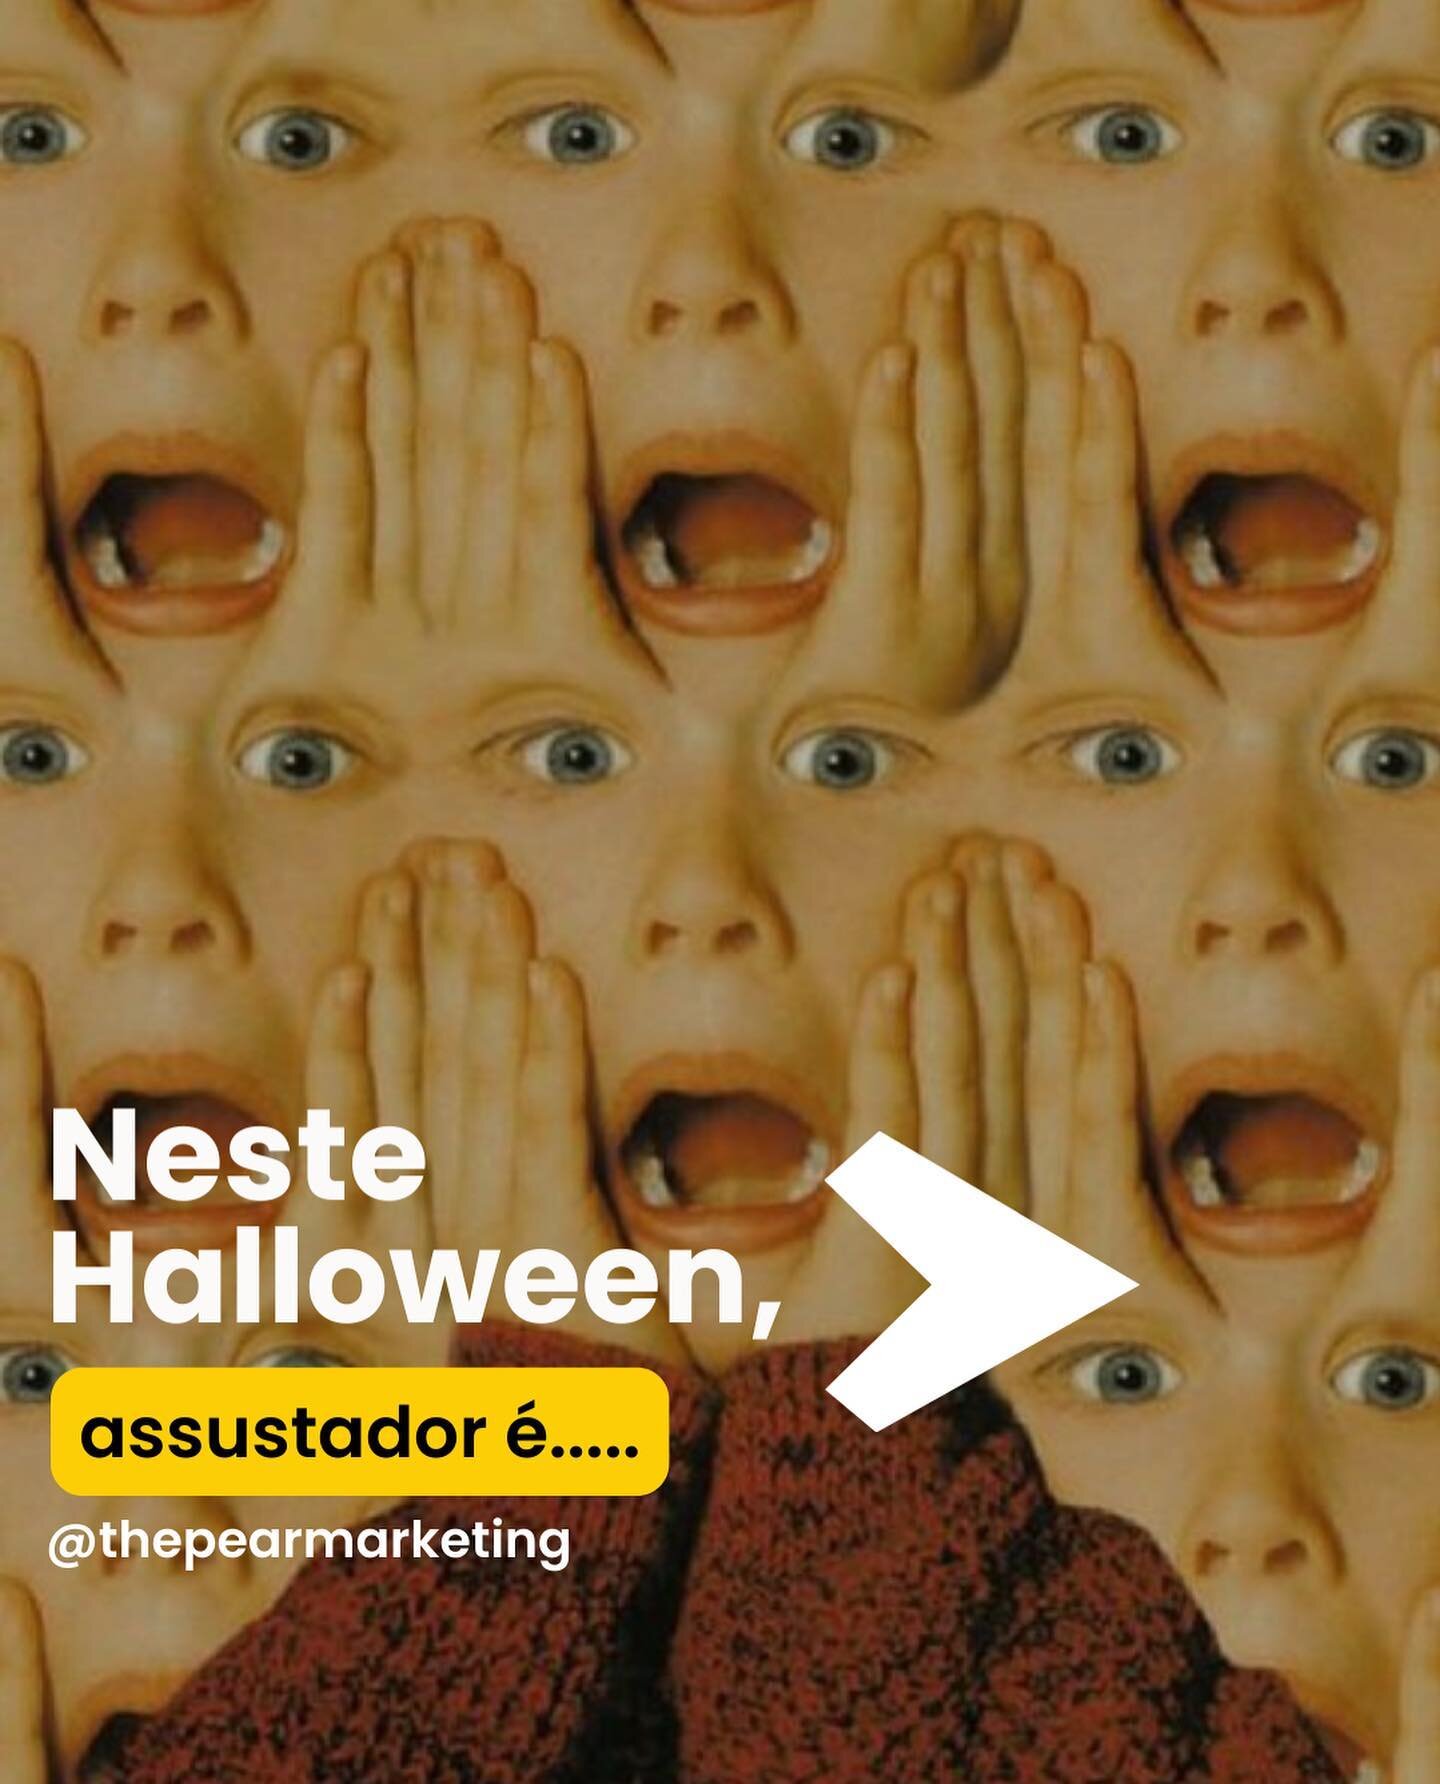 Isto sim &eacute; ASSUSTADOR! 🎃👻

#halloween #marketing #assustador